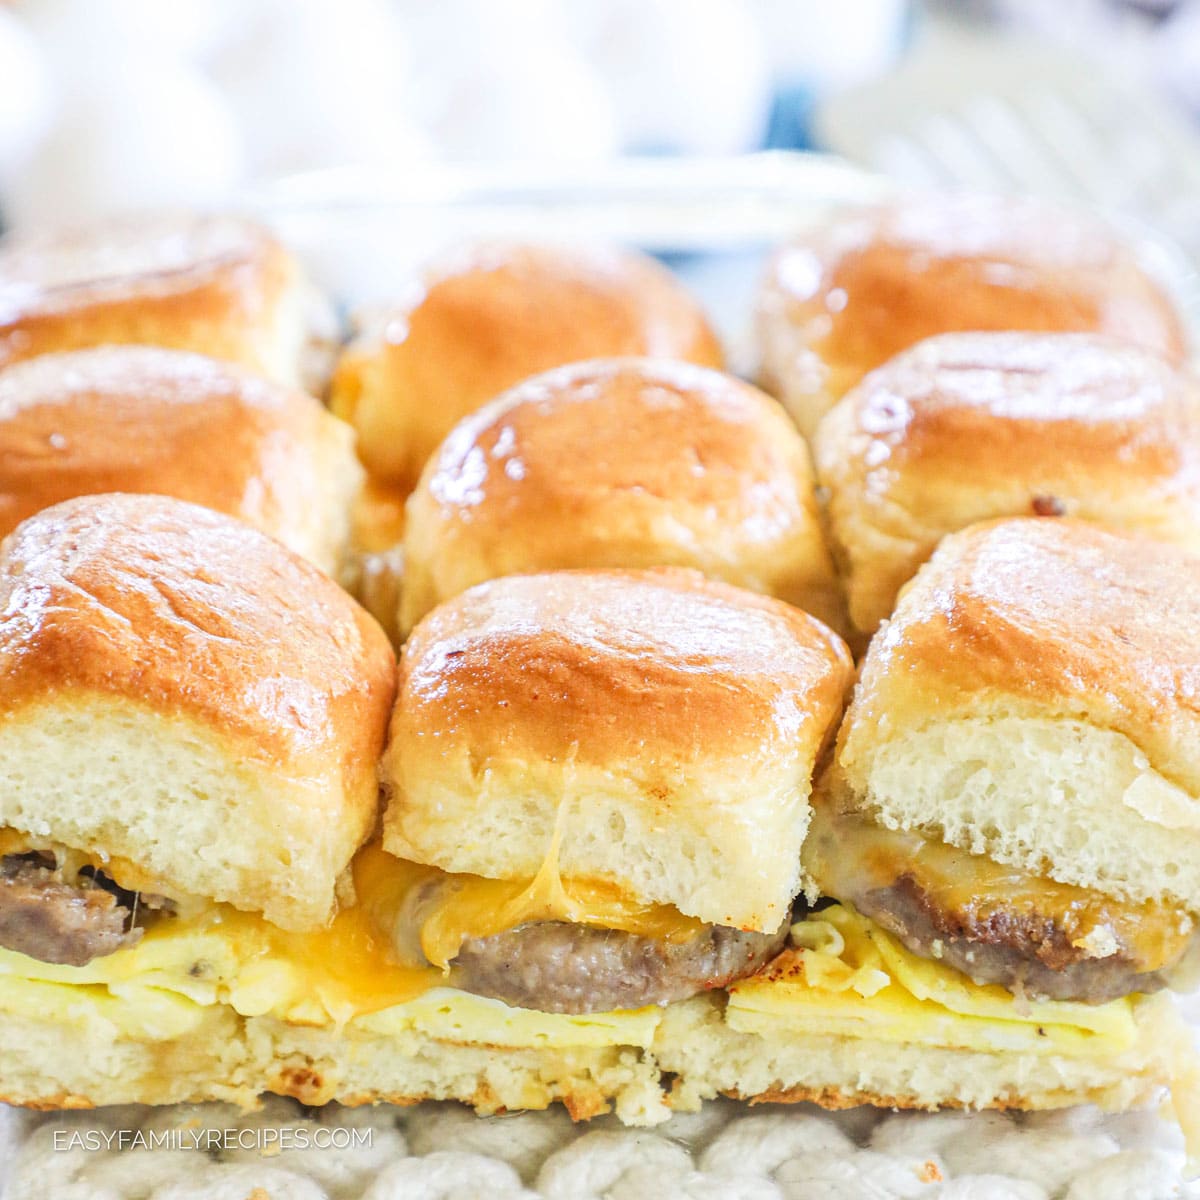 Hawaiian Roll Breakfast Sliders with Sausage, Egg & Cheese